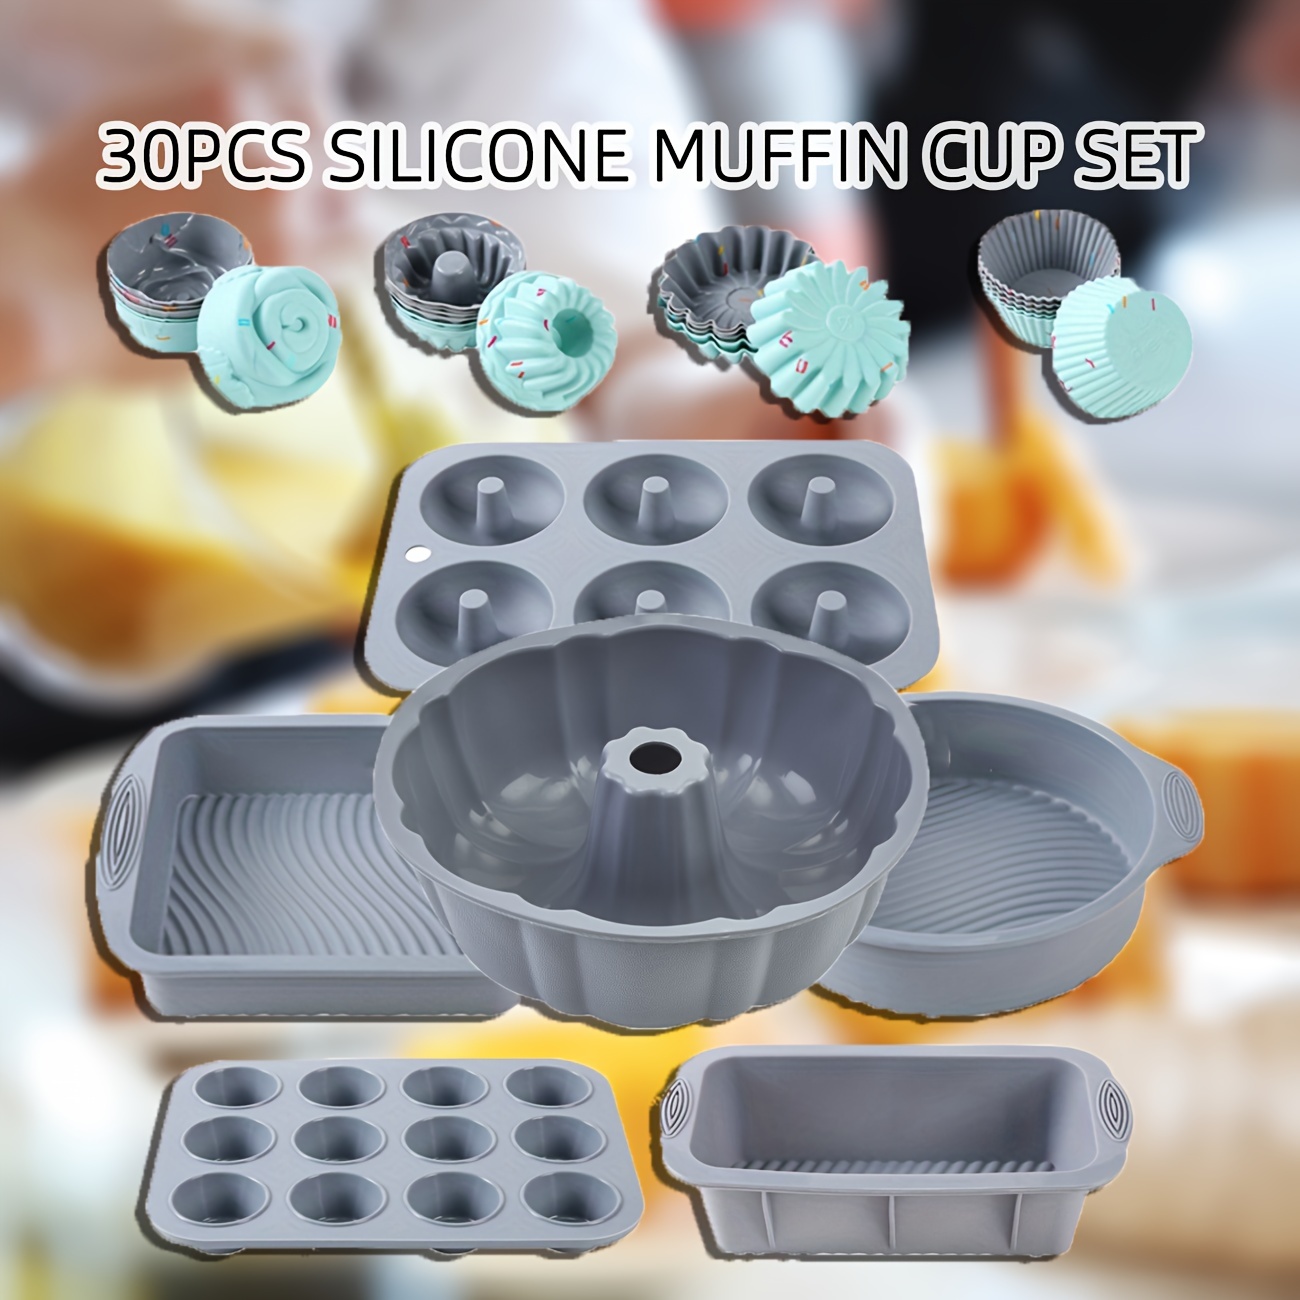  30pcs Nonstick Silicone Bakeware Set With Baking Pan, Silicone  Cake Molds, Baking Sheet, Donut Pan, Silicone Muffin Pan,Cake Pan, And 24  Pack Silicone Cupcake Mold Baking Cups: Home & Kitchen